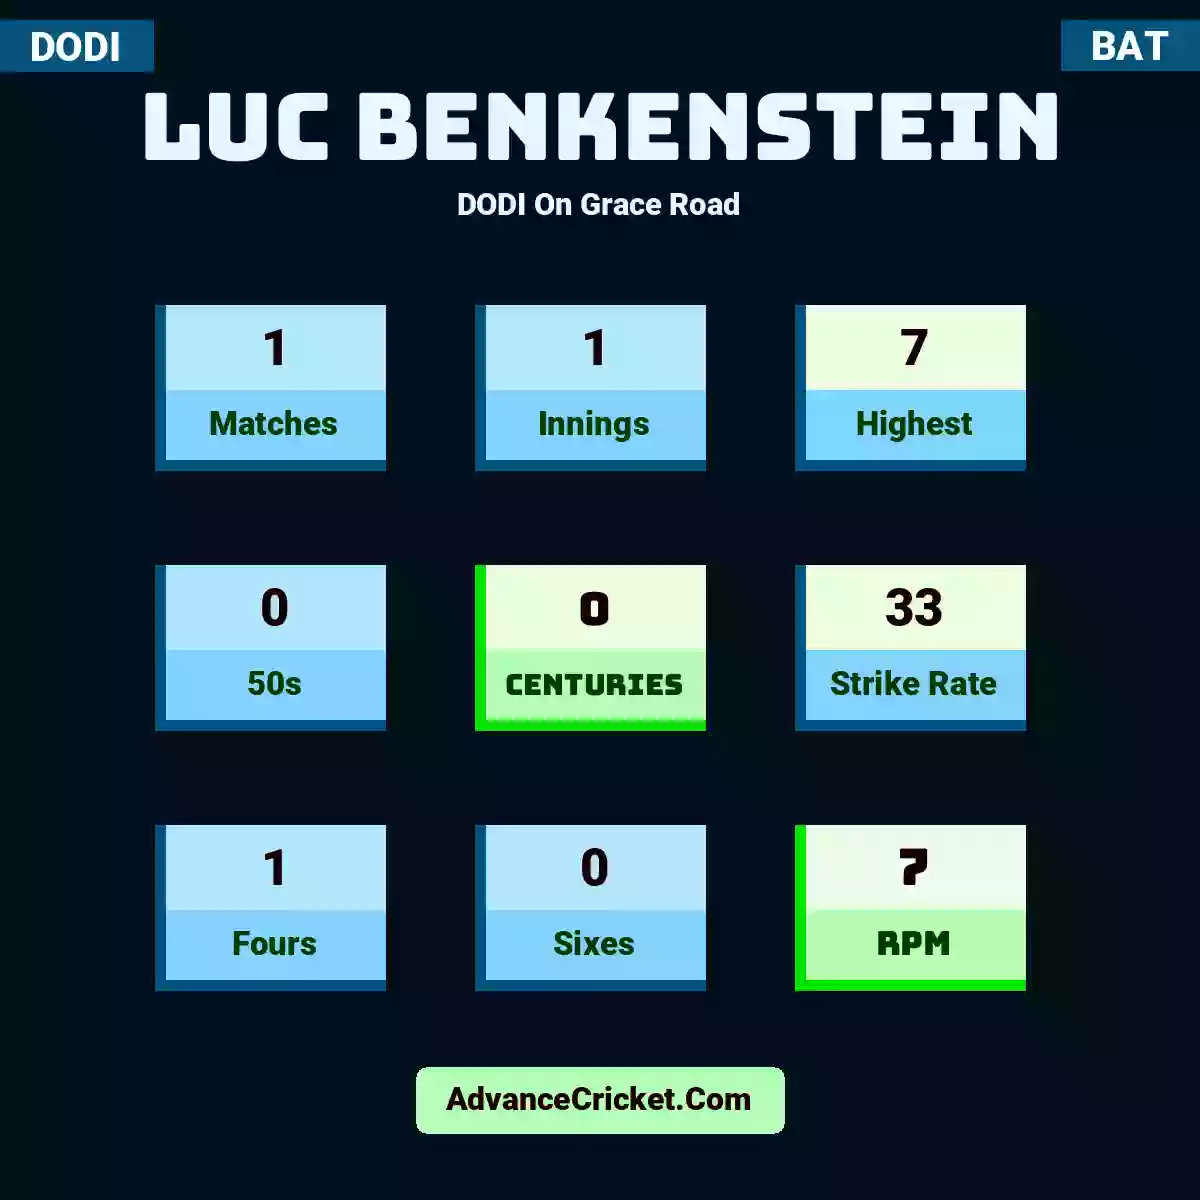 Luc Benkenstein DODI  On Grace Road, Luc Benkenstein played 1 matches, scored 7 runs as highest, 0 half-centuries, and 0 centuries, with a strike rate of 33. L.Benkenstein hit 1 fours and 0 sixes, with an RPM of 7.